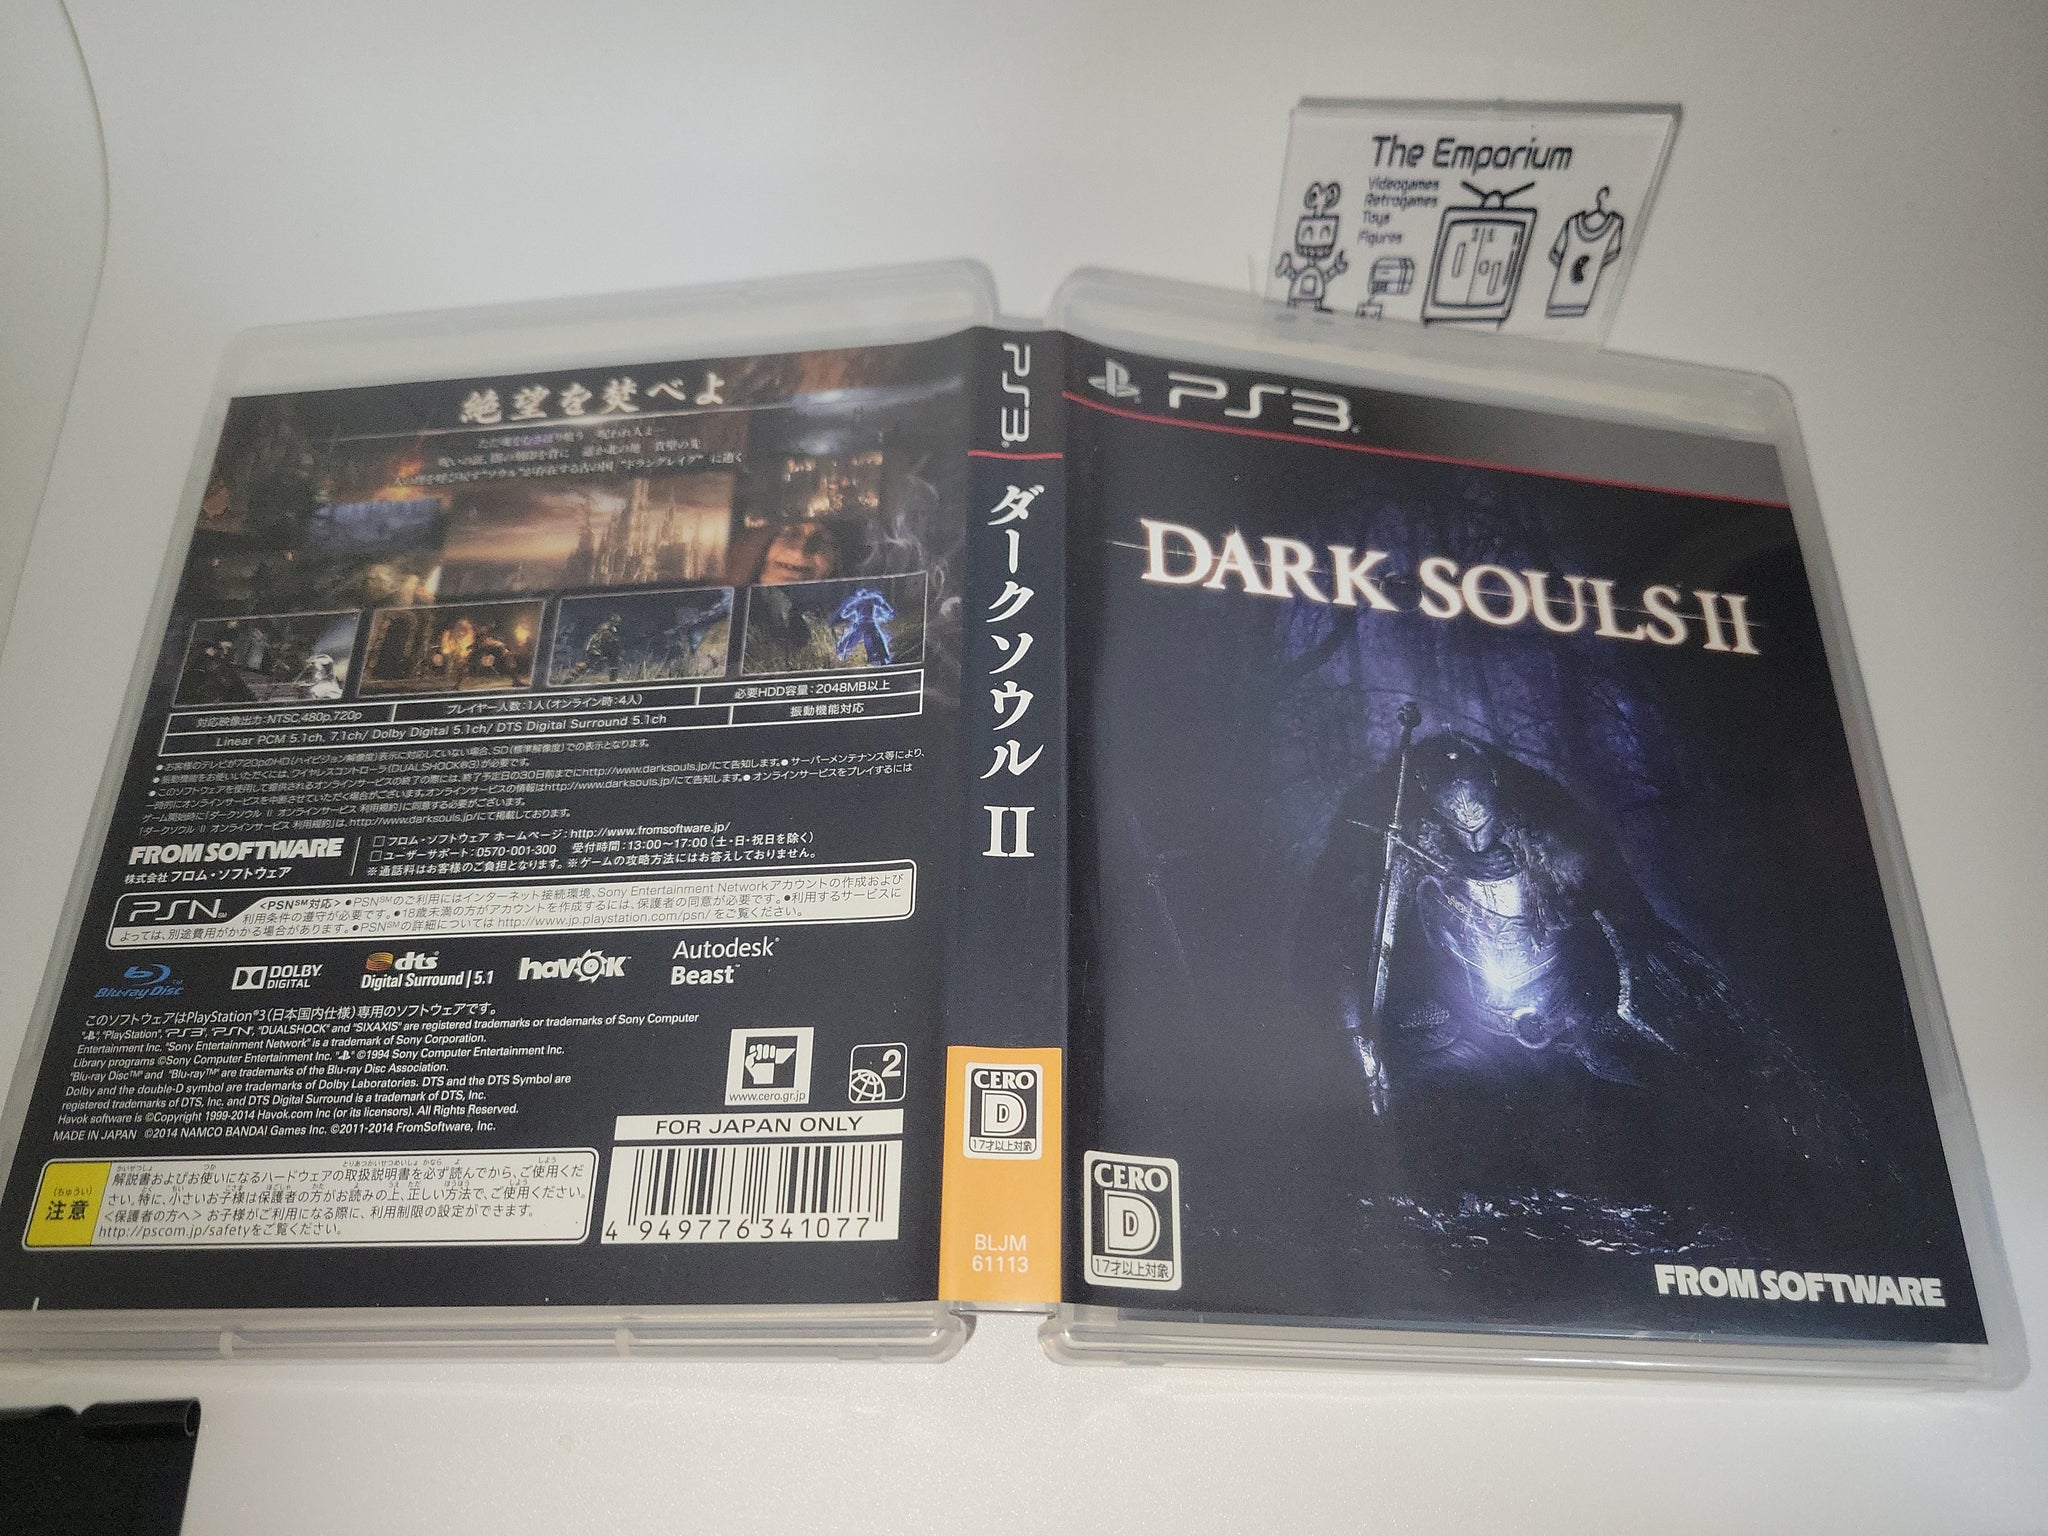 Dark Souls II - Playstation 3